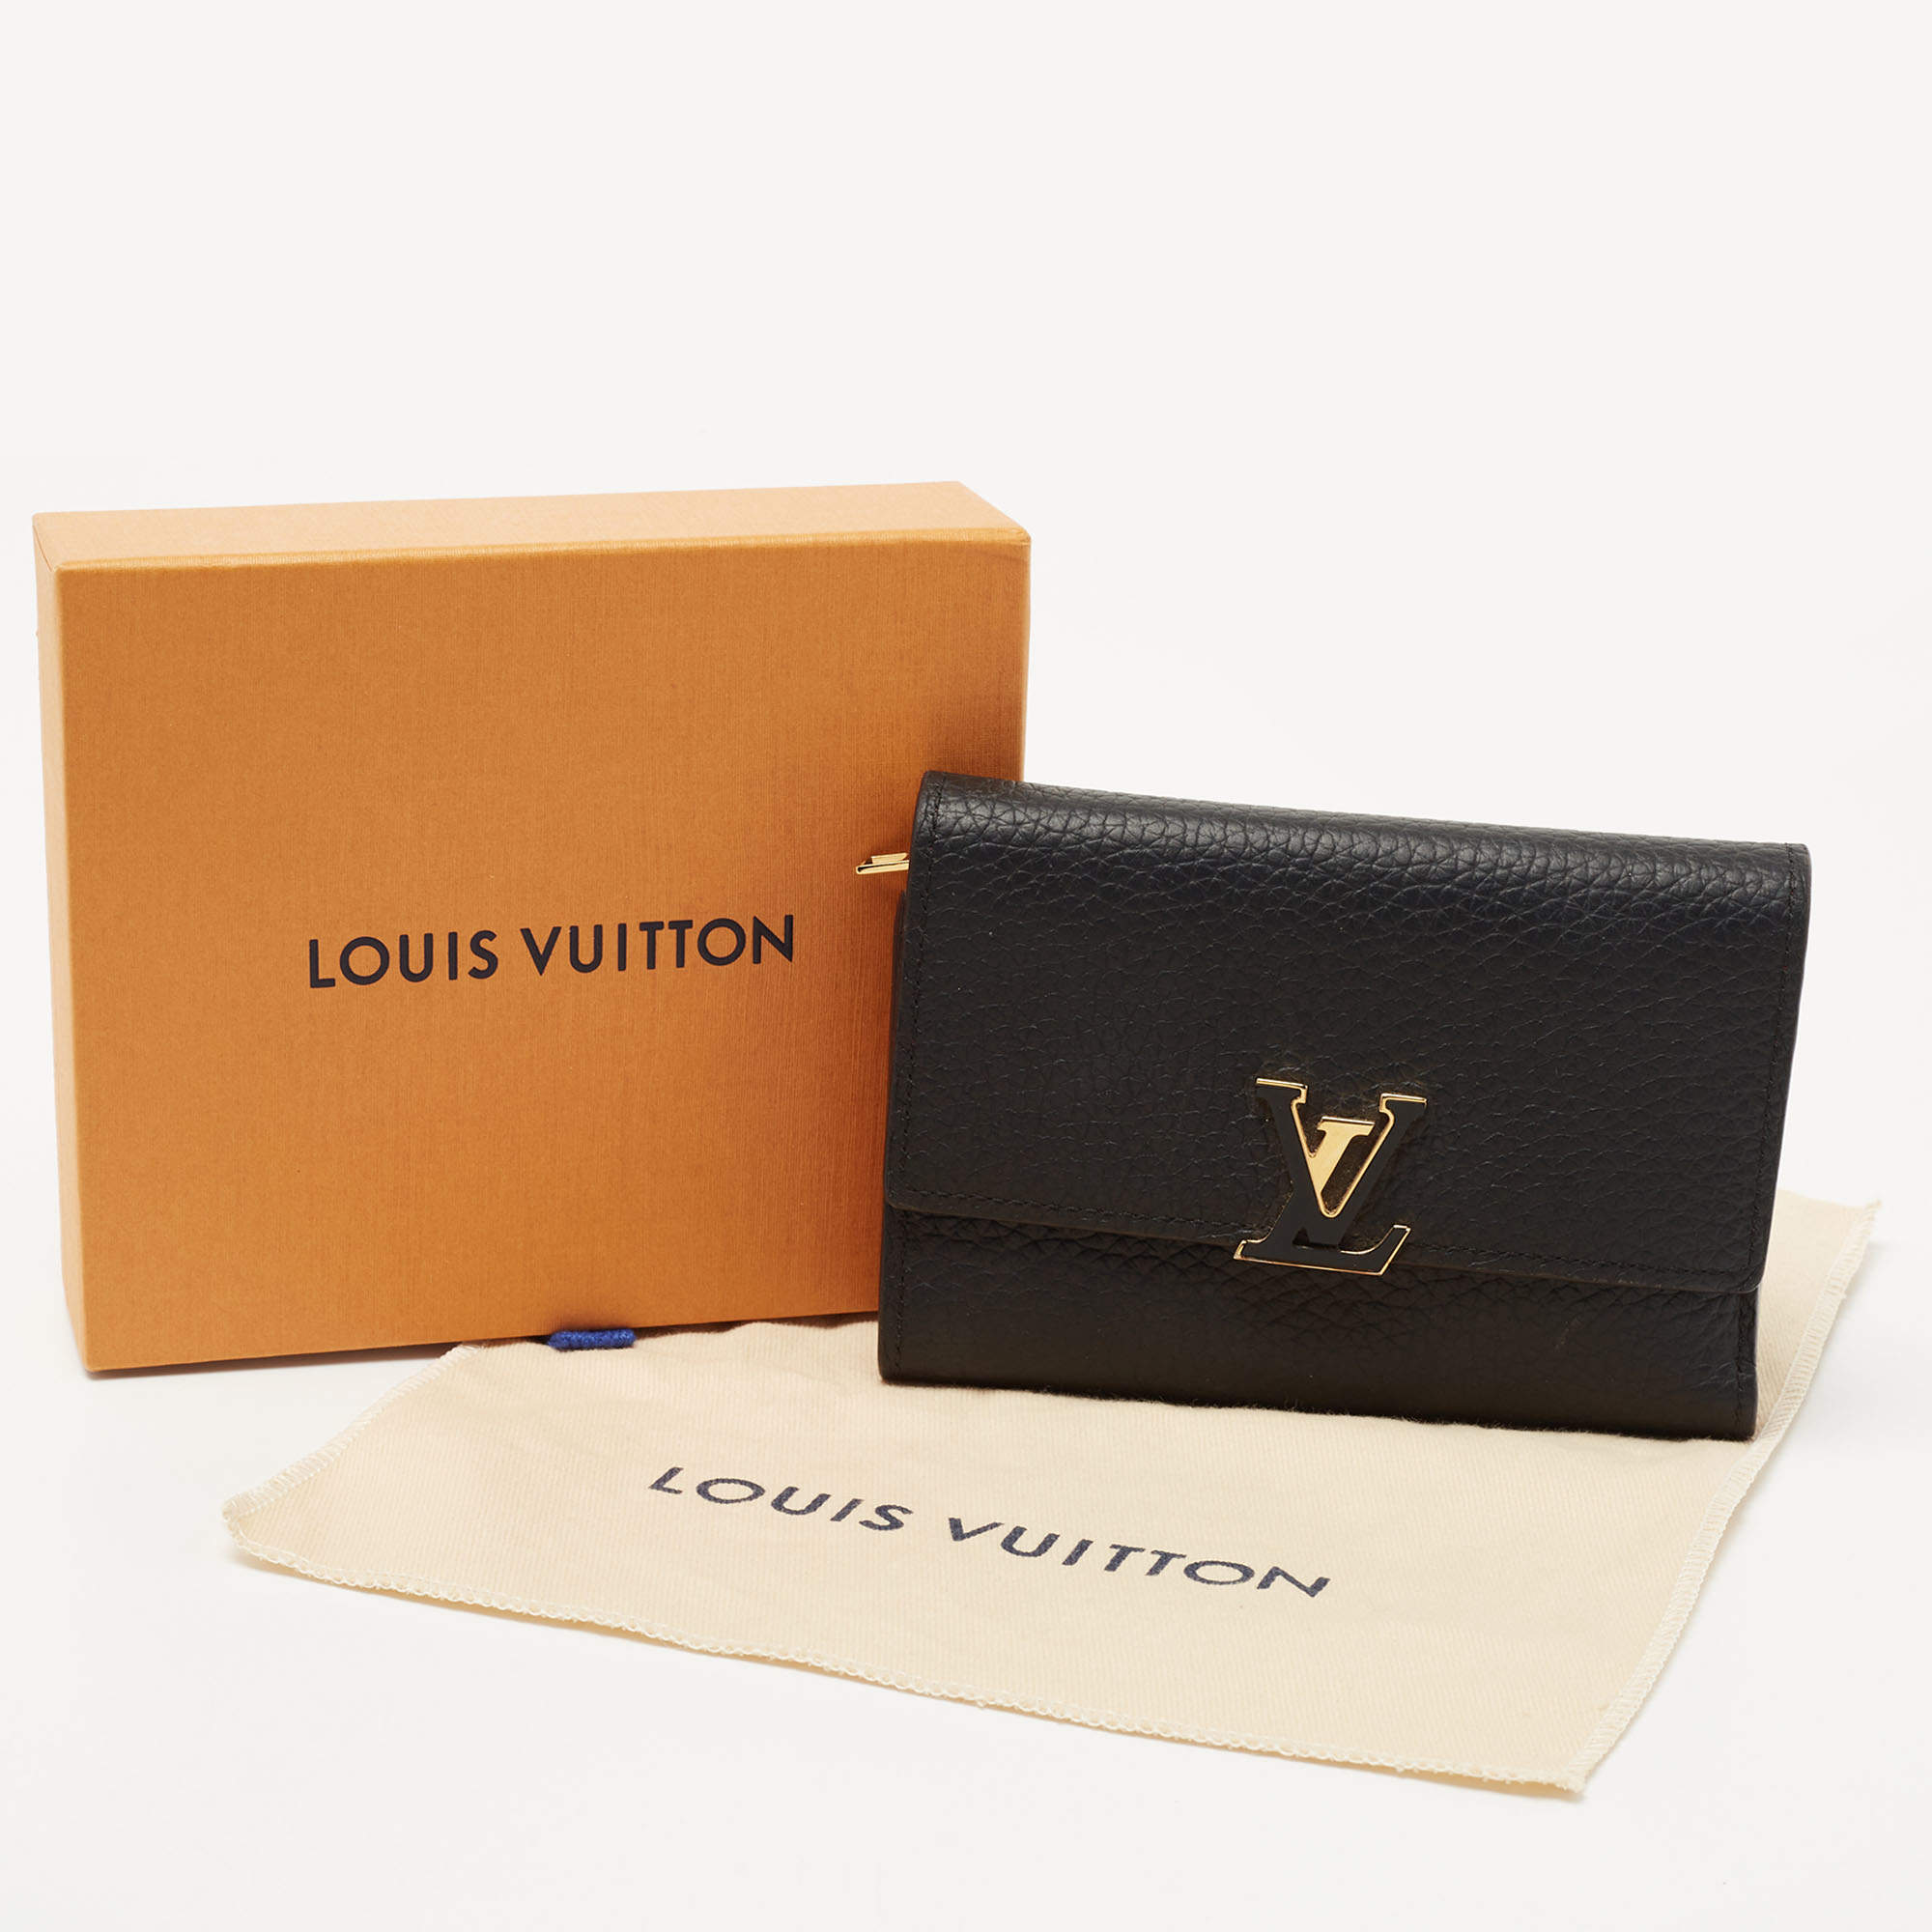 LOUIS VUITTON Taurillon Capucines Compact Wallet Marine Rouge 1205693